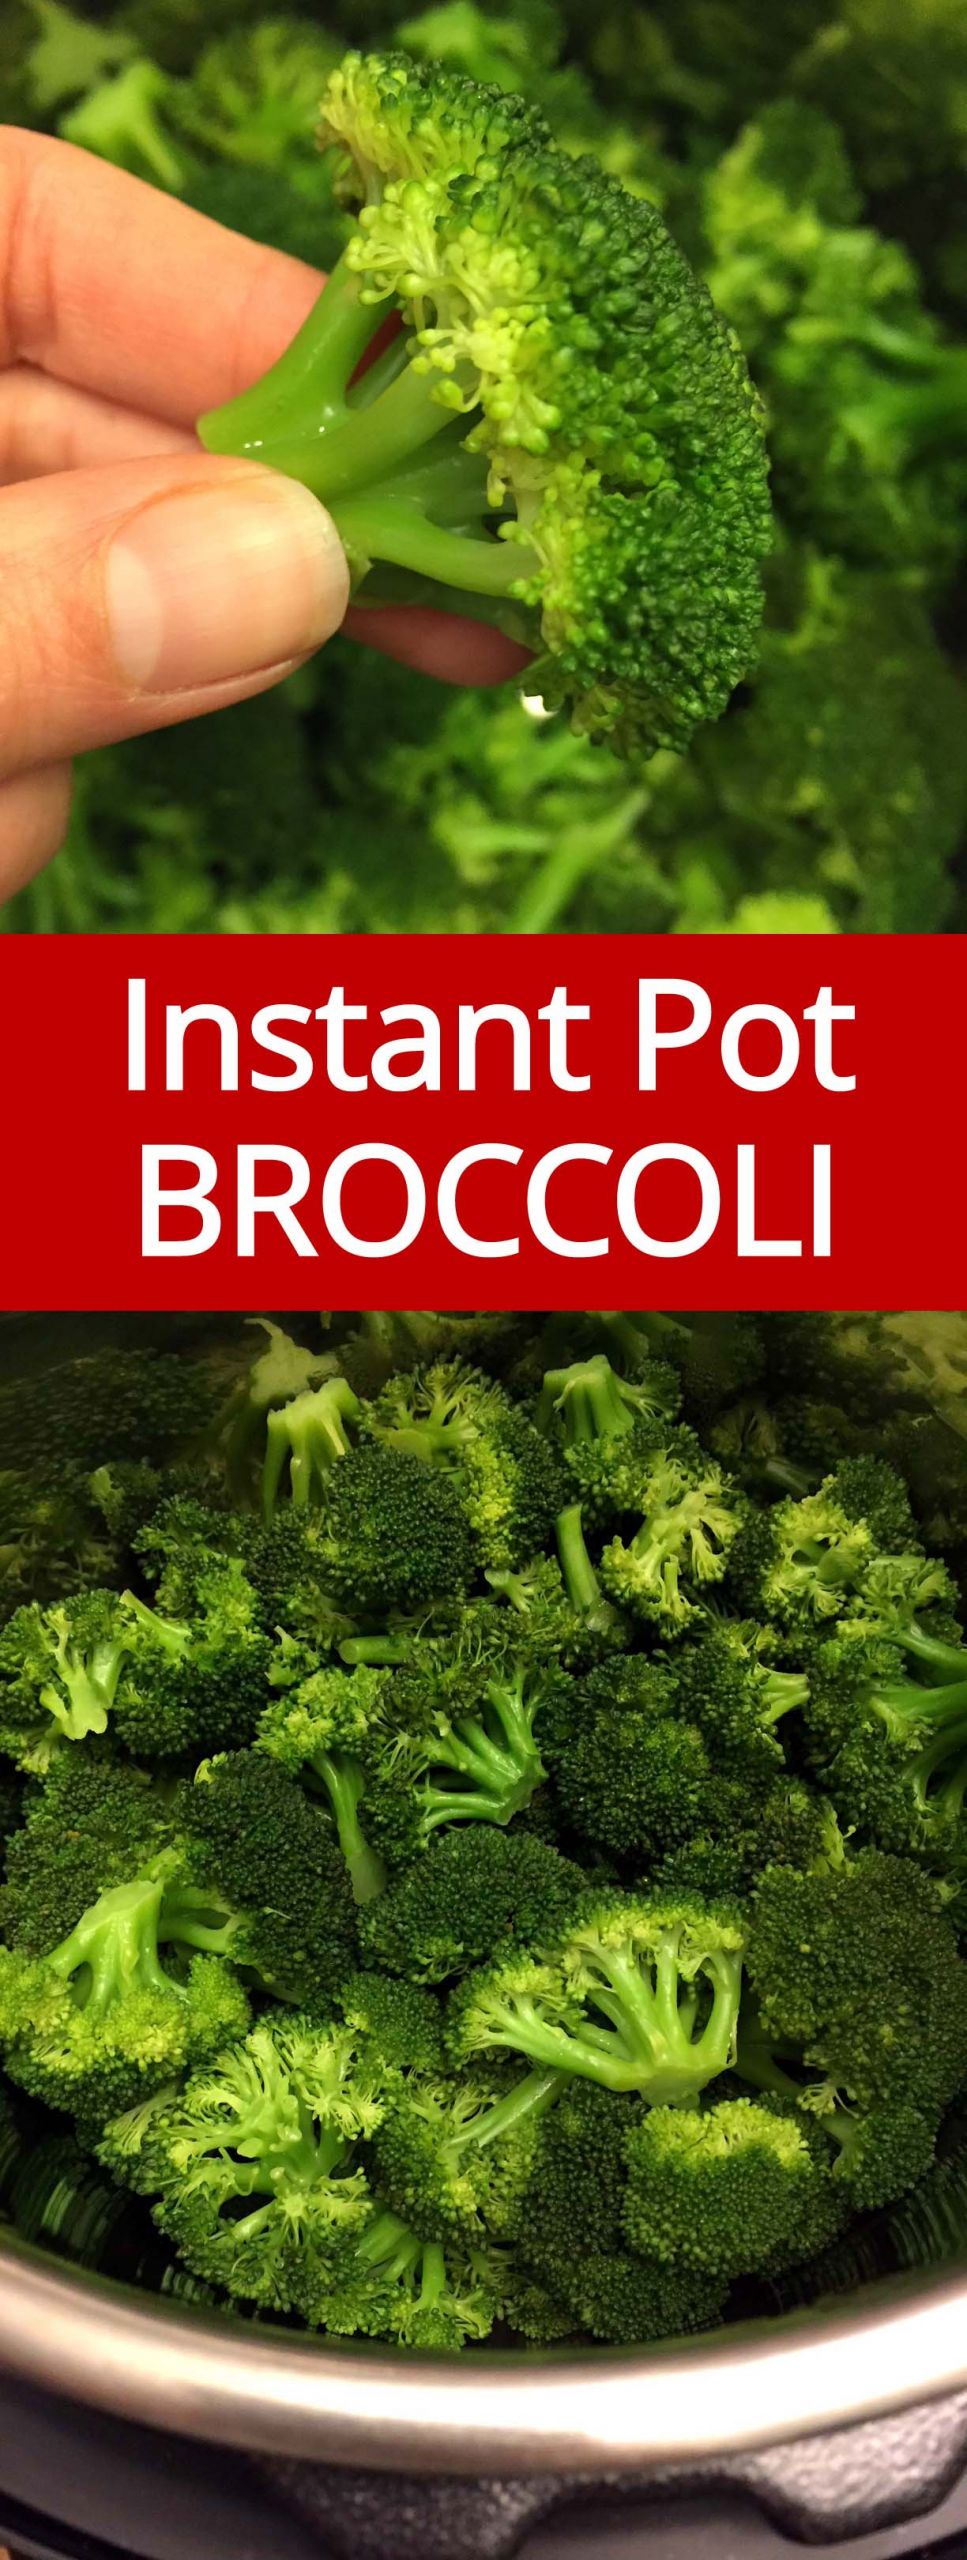 Broccoli Instant Pot
 Instant Pot Broccoli Recipe – Pressure Cooker Steamed